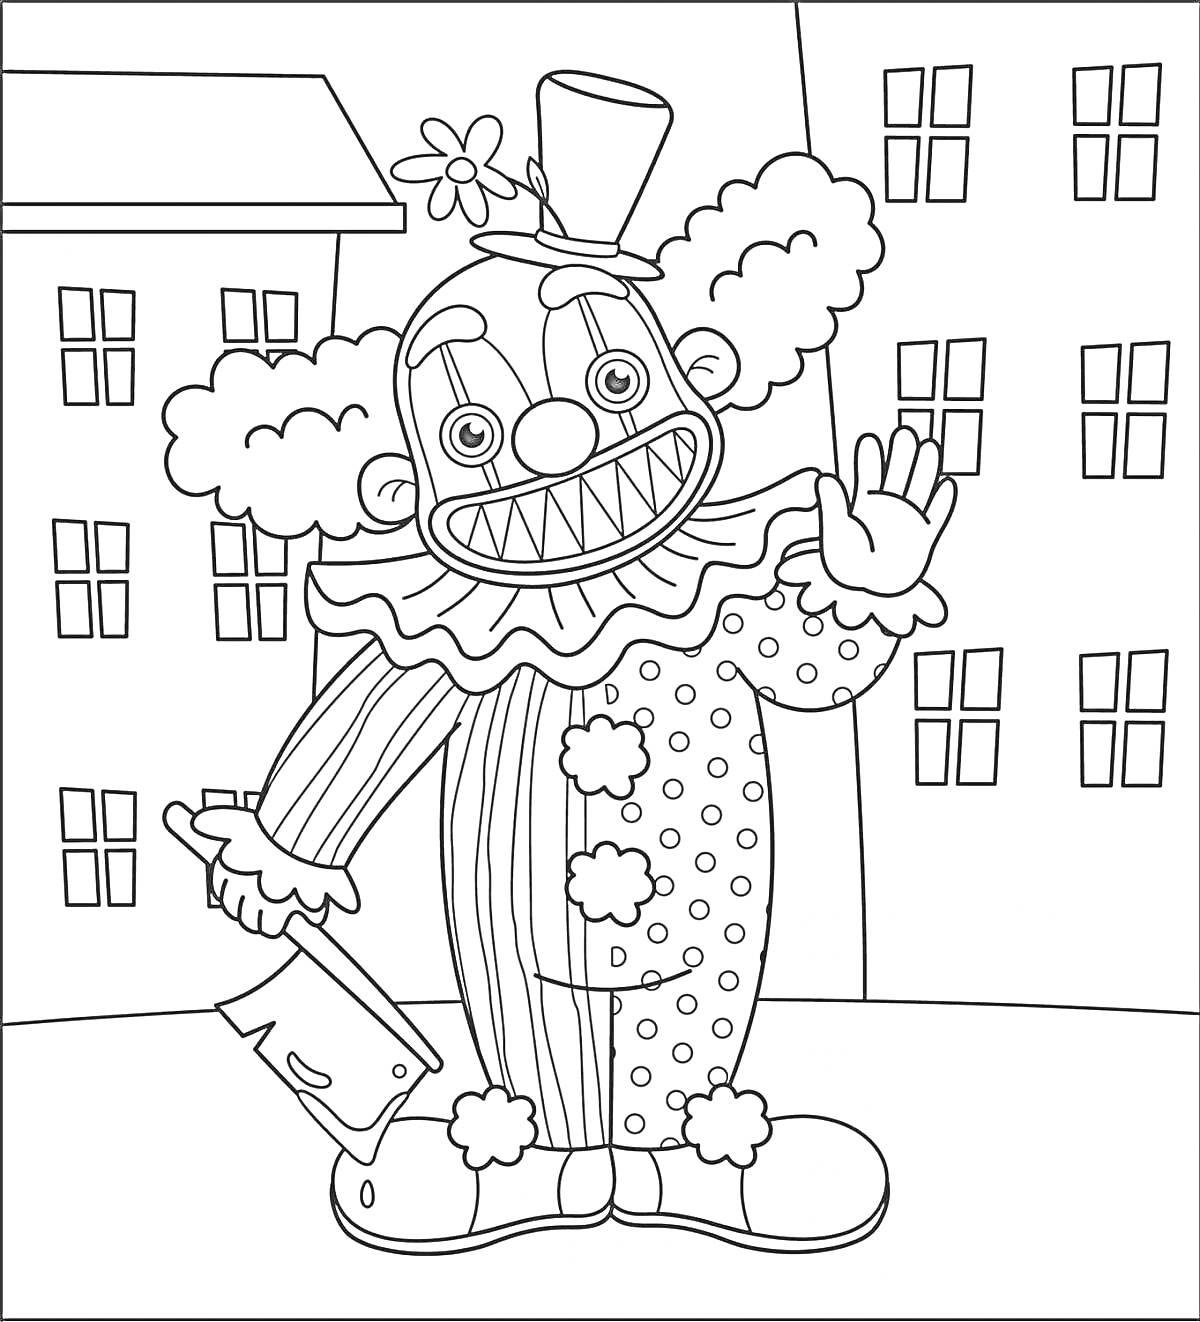 Раскраска Клоун с тесаком на улице с домами